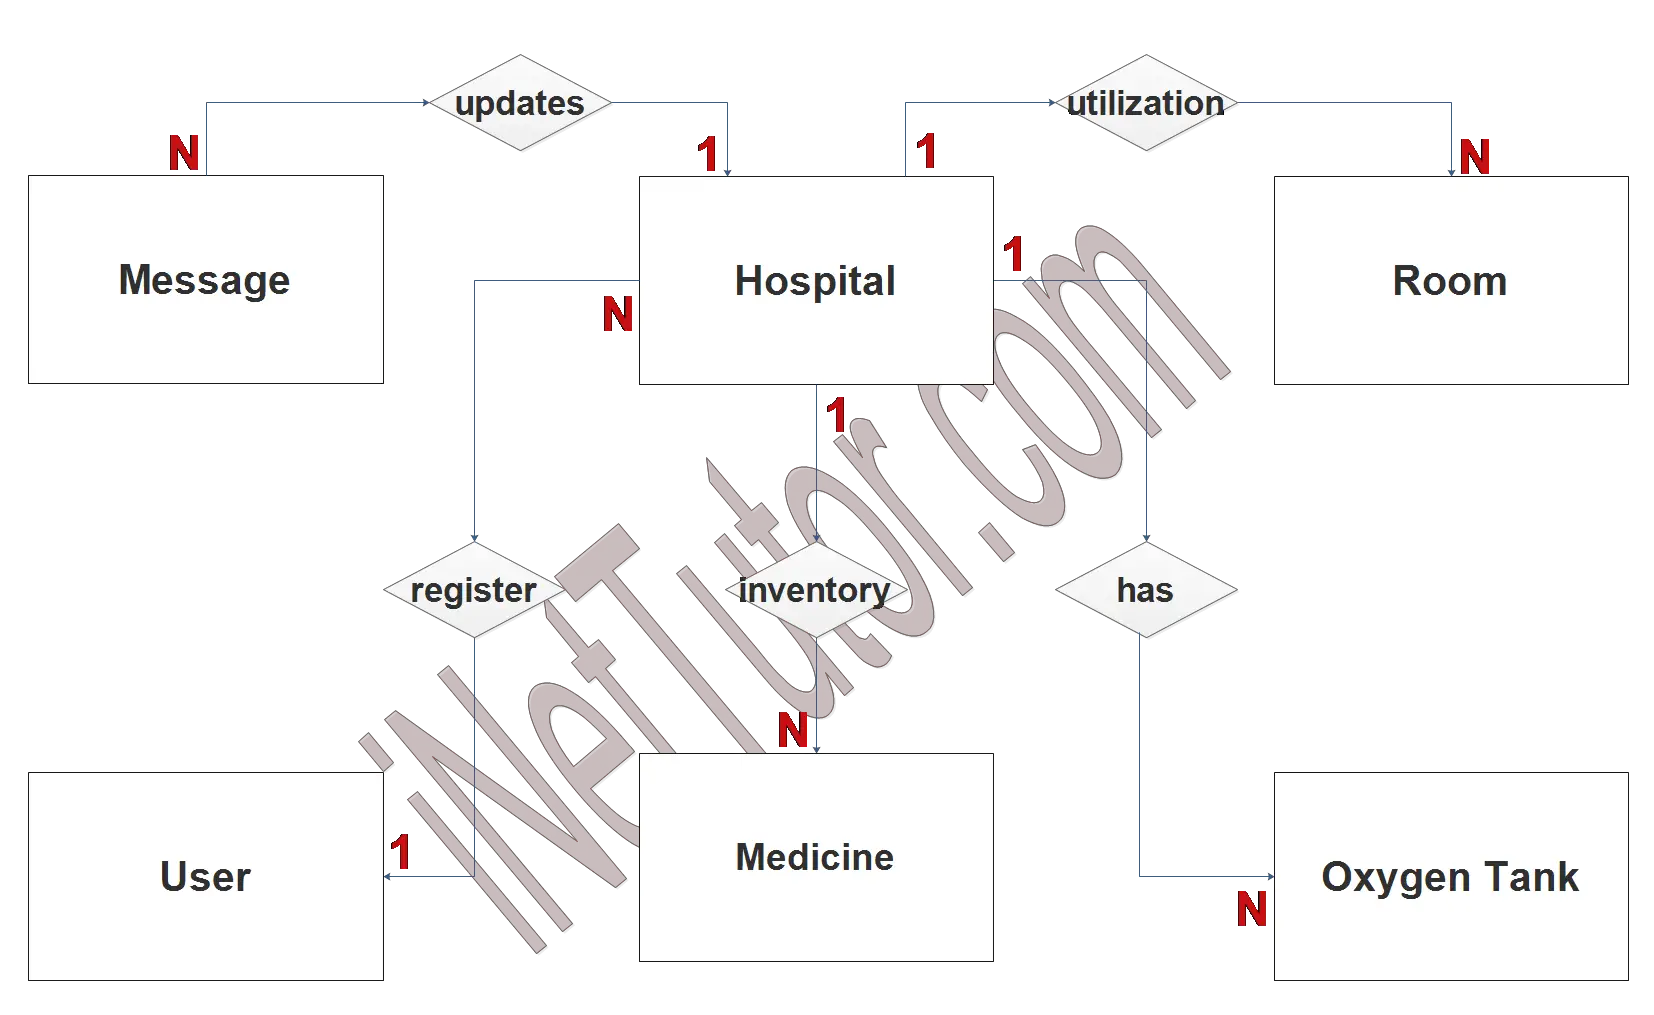 Hospital Resources and Room Utilization ER Diagram - Step 2 Table Relationship